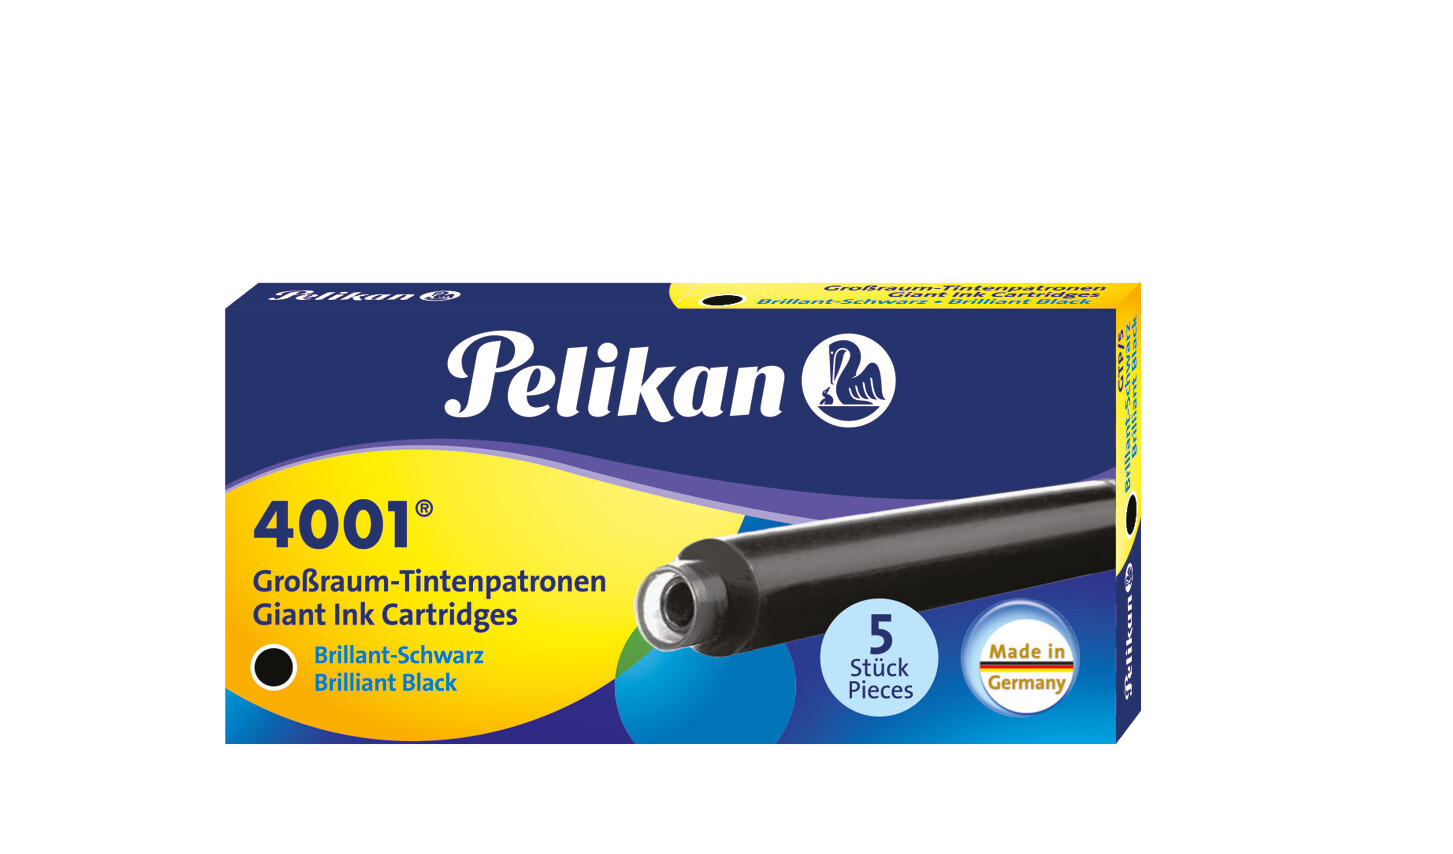 Pelikan Tintenpatronen 4001® 5er Set Großraum-Patronen Brillant-Schwarz